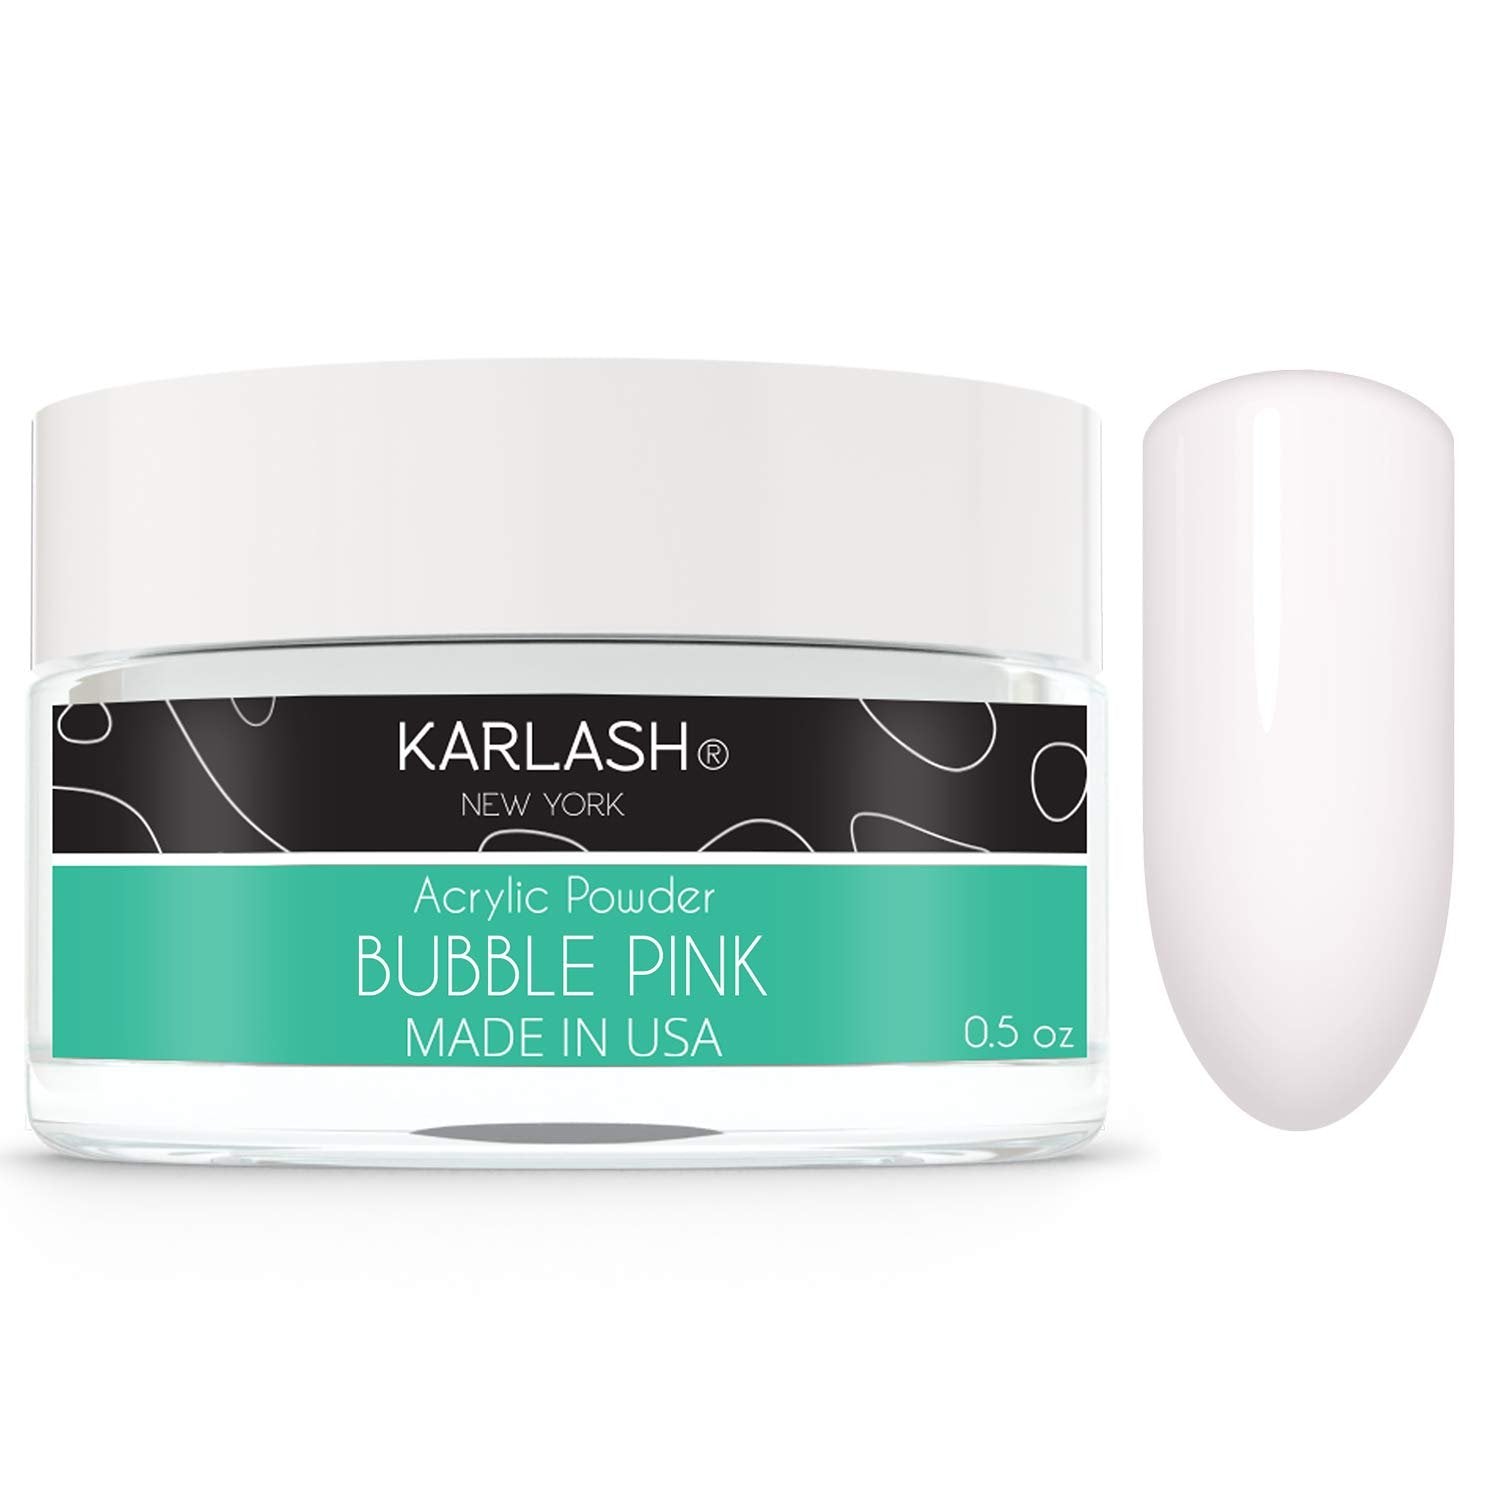 Karlash Professional Acrylic Powder Bubble Pink 0.5 oz